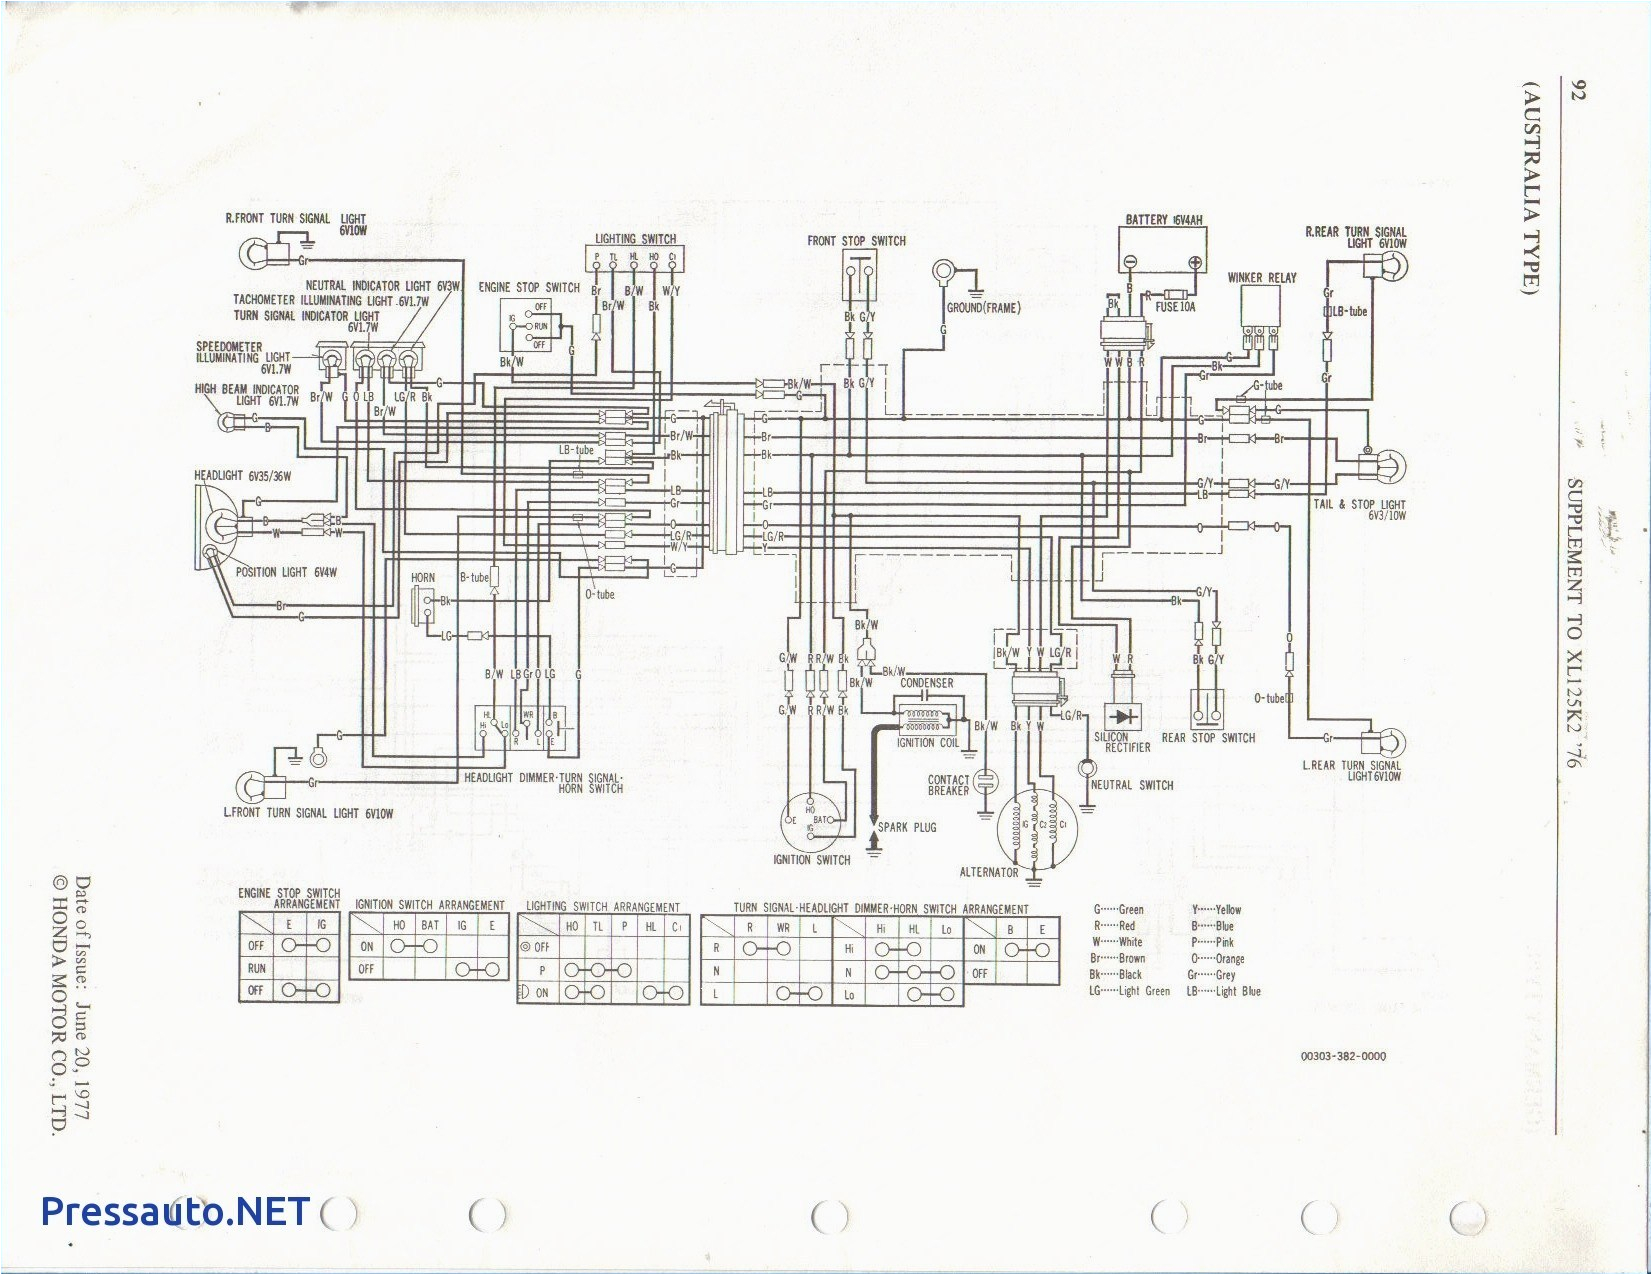 xl125 wiring diagram wiring diagram blog 1974 honda xl125 wiring diagram xl125 wiring diagram